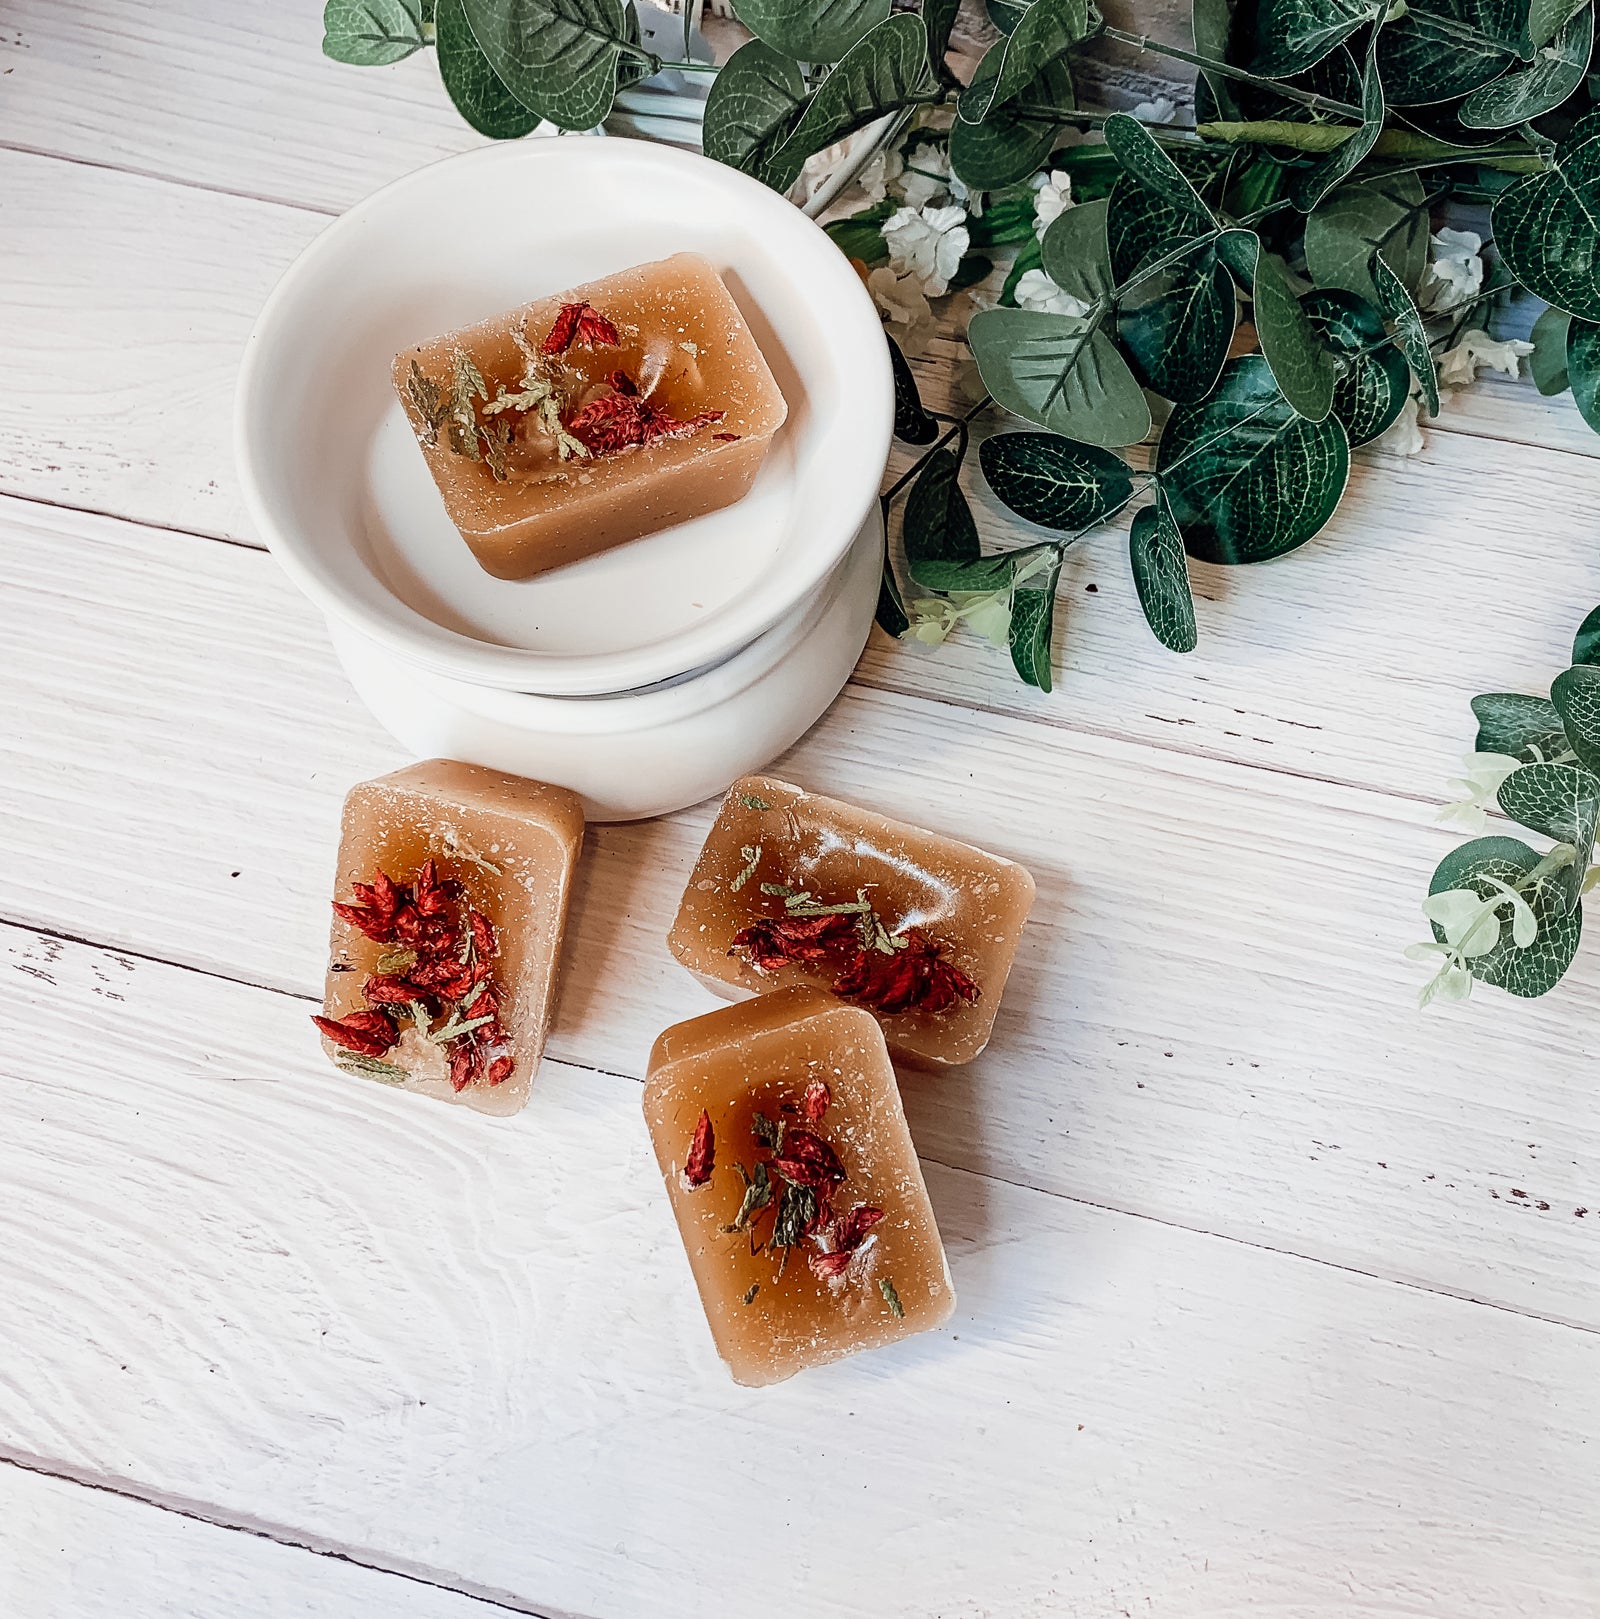 Cinnamon Clove Wax Melts XL & Toxin Free - Real Fresh Ingredients – Gia Roma